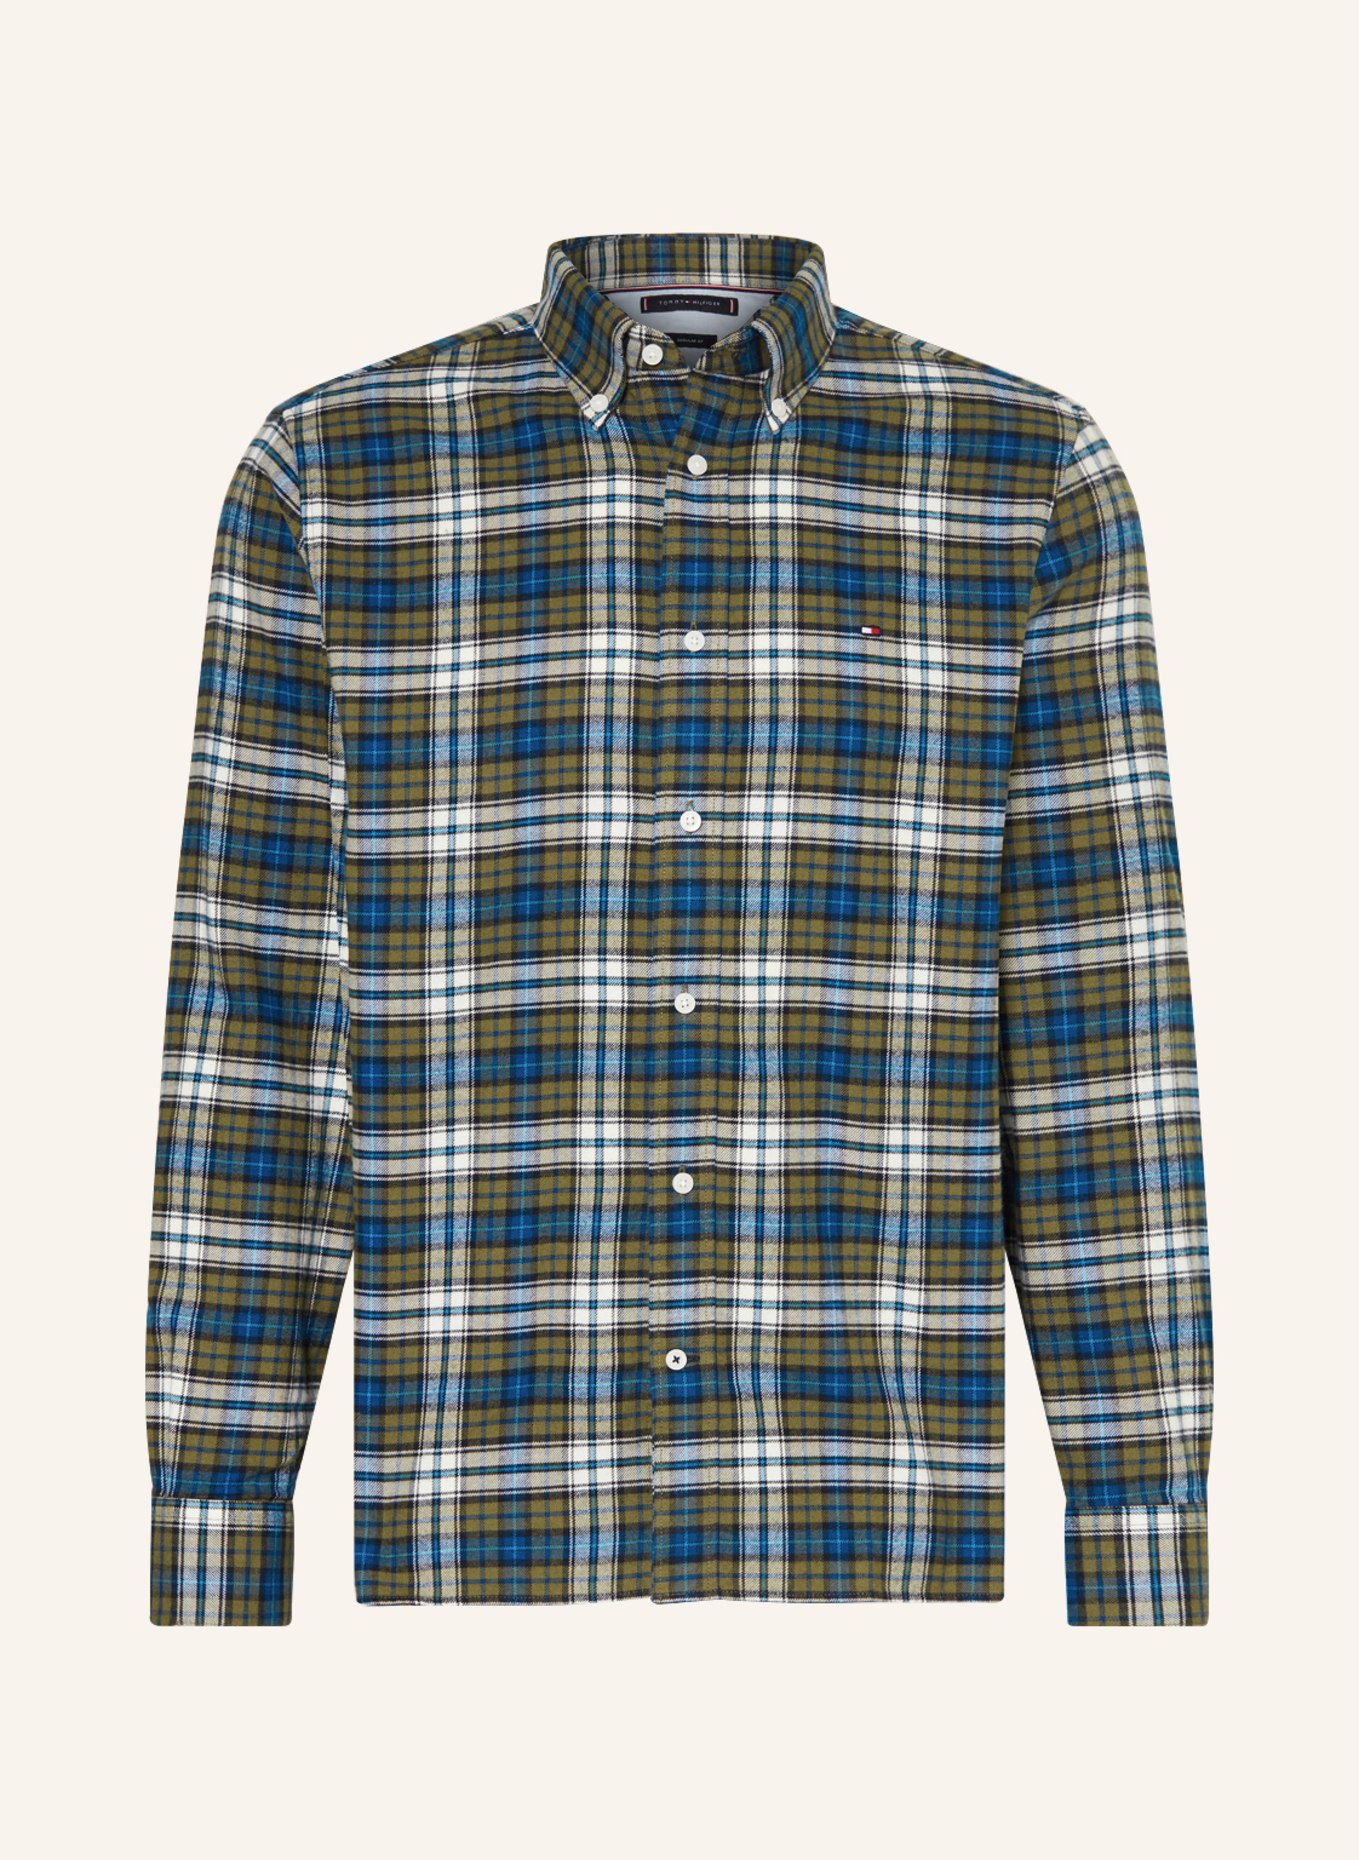 TOMMY HILFIGER Flanellhemd Regular Fit, Farbe: OLIV/ BLAU/ WEISS (Bild 1)